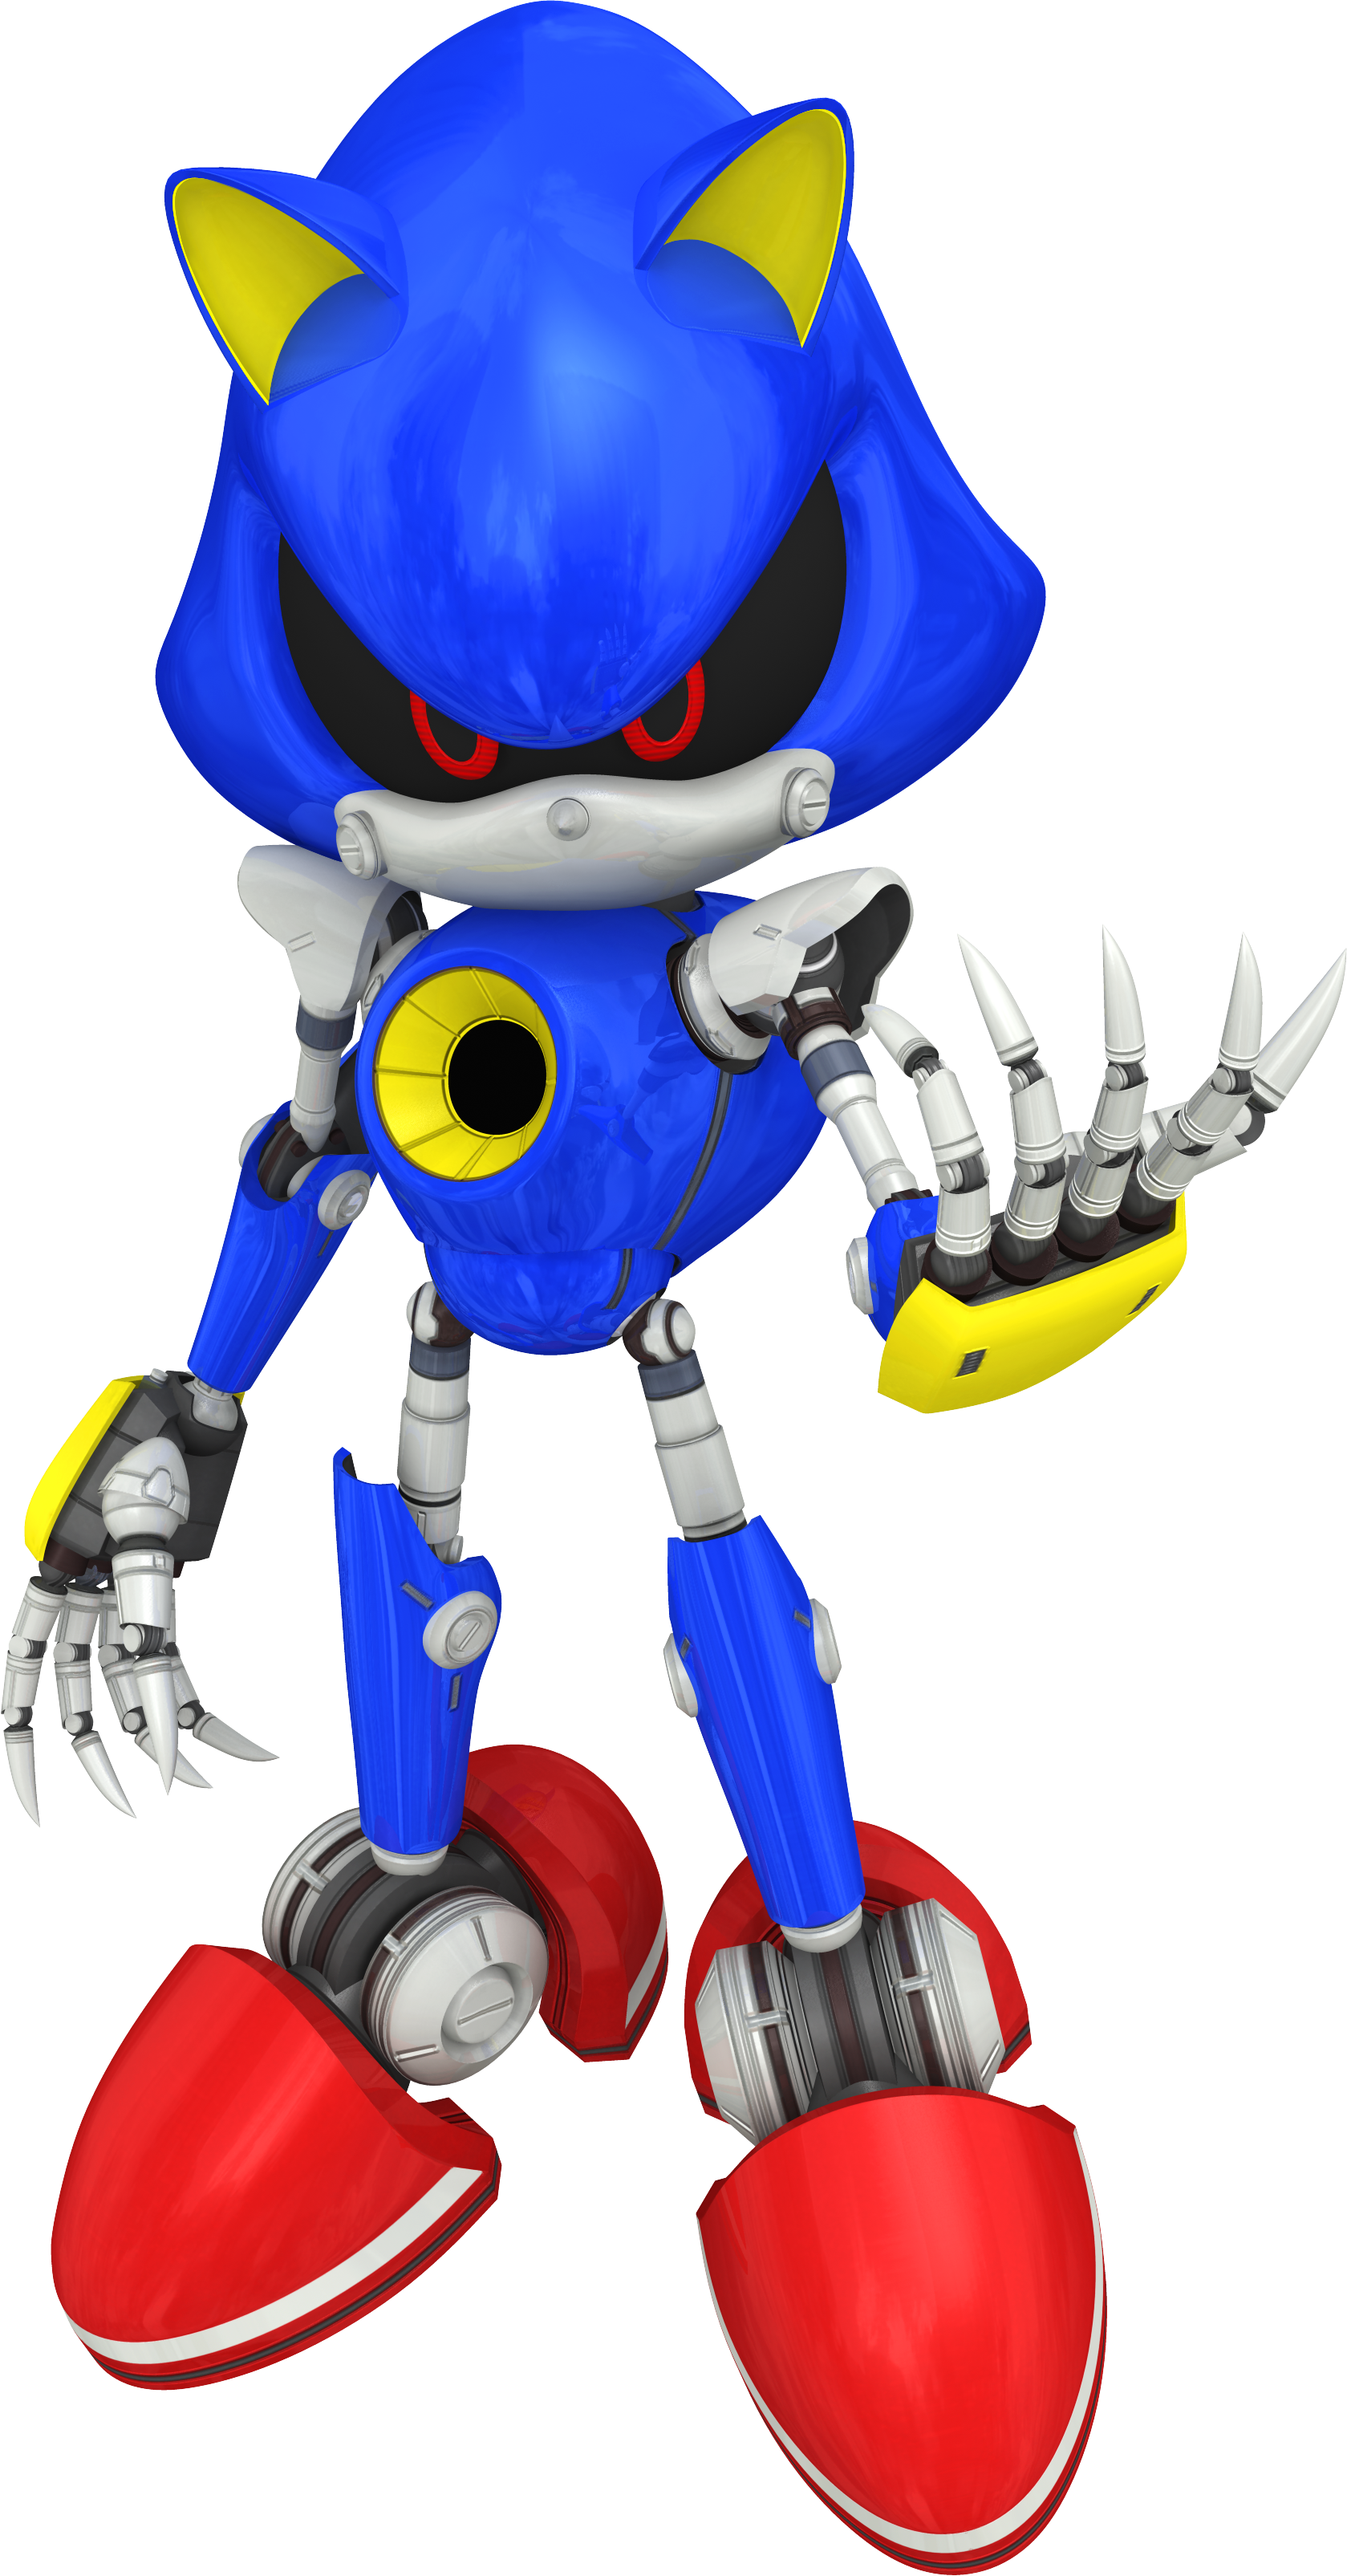 Metal Sonic  Sonic Riders